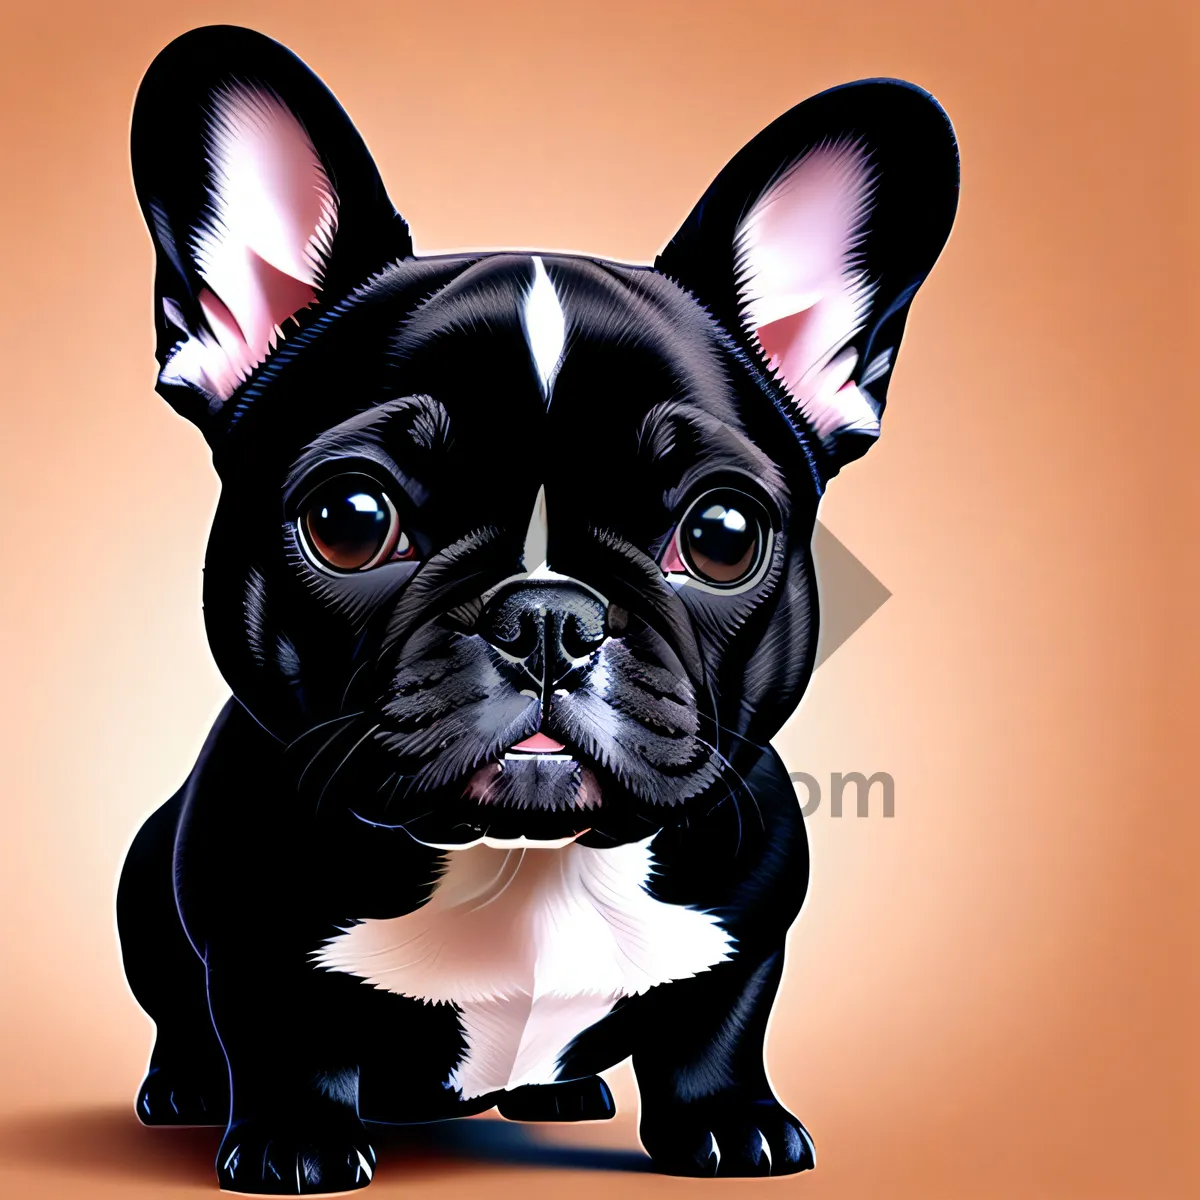 Picture of Cute Studio Cartoon Bulldog Pet Image.